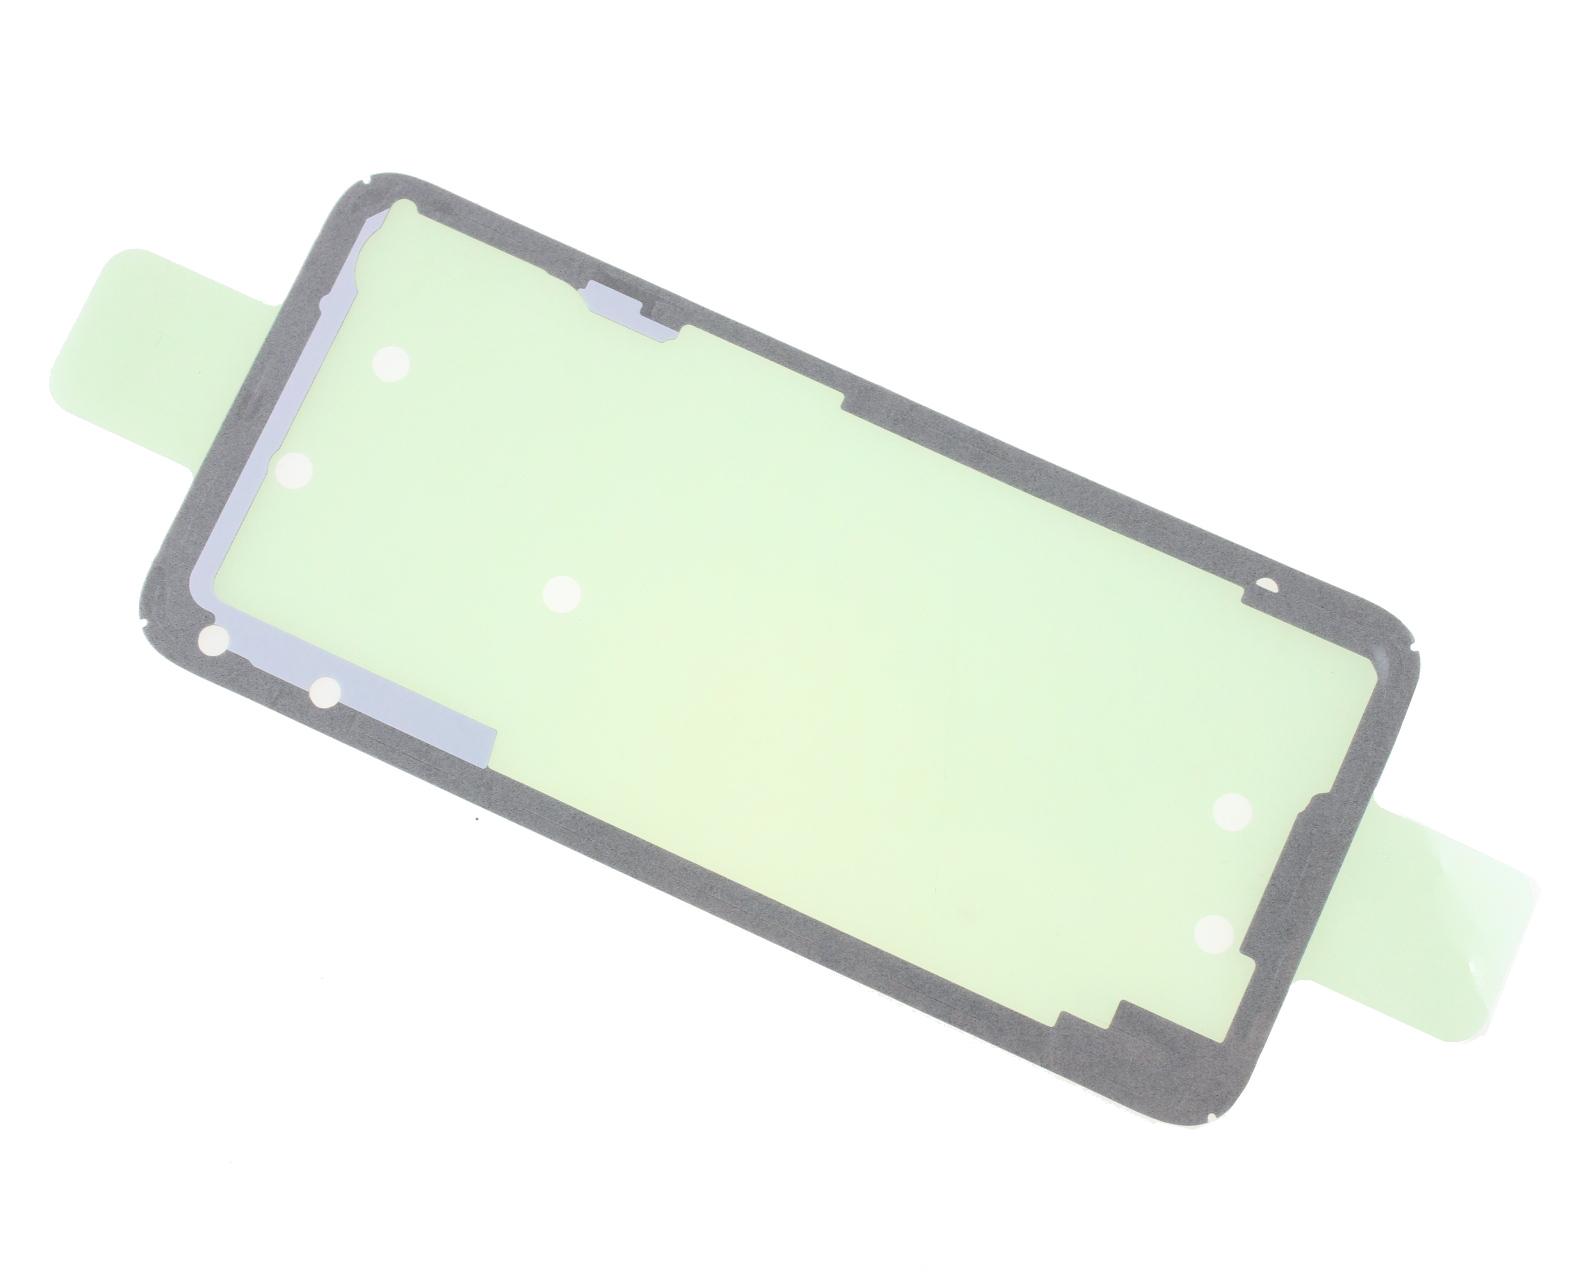 Originál montážní lepící páska krytu baterie Samsung Galaxy A90 SM-A908